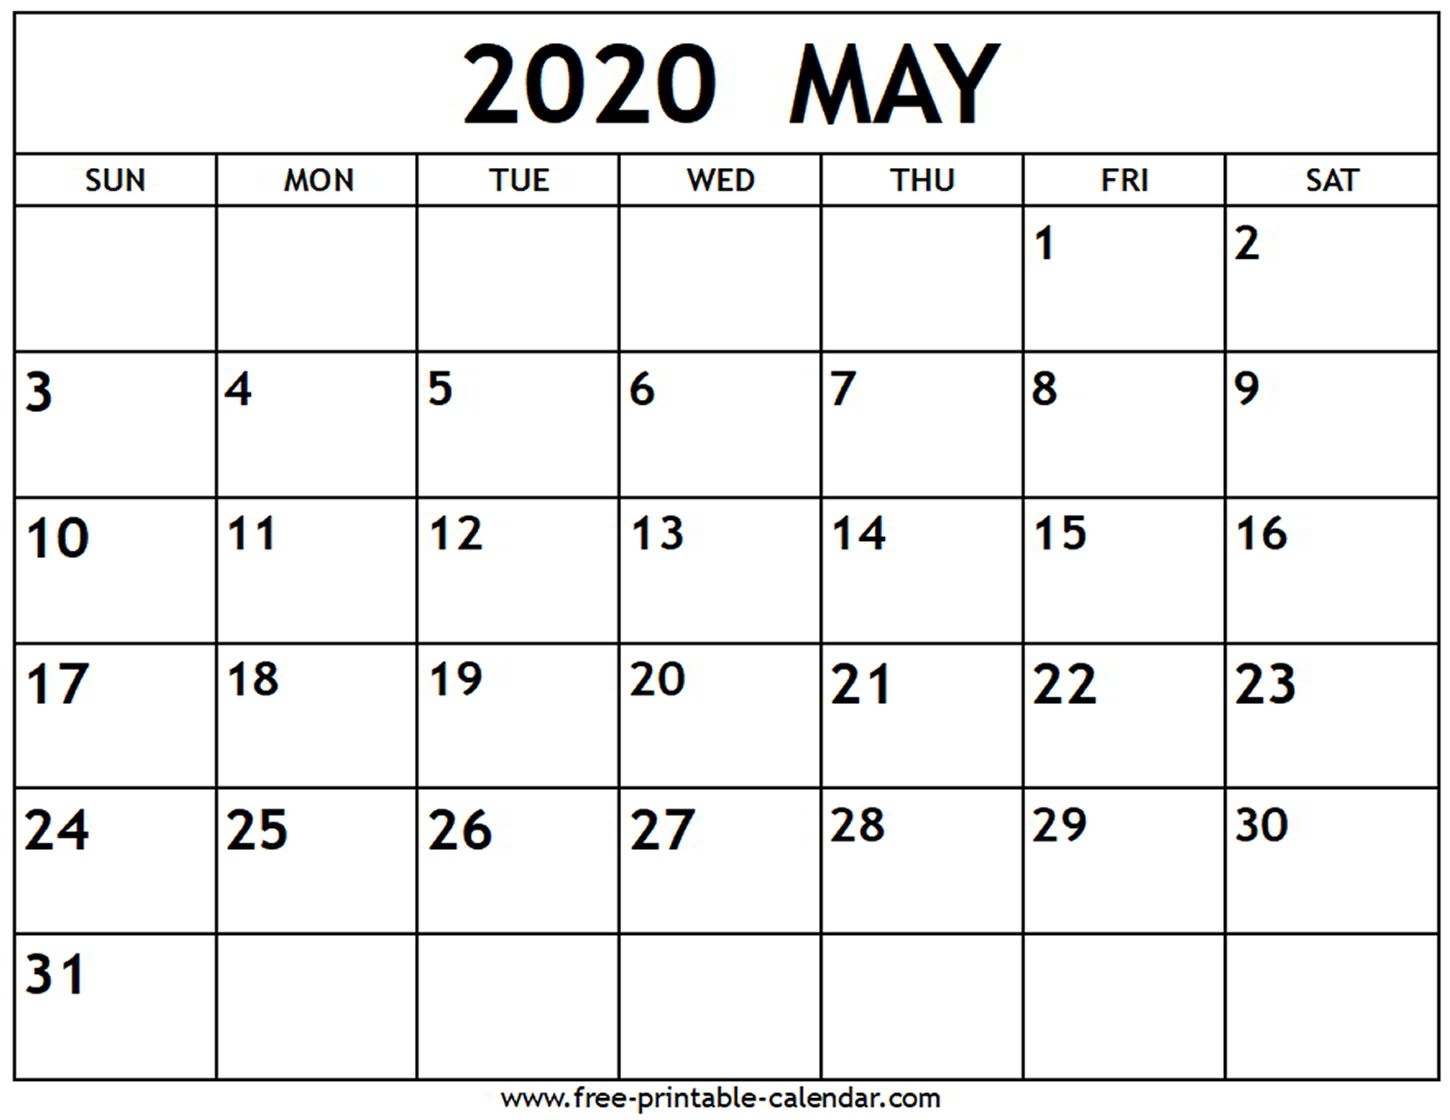 May 2020 Calendar - Free-Printable-Calendar May 2020 Calendar Canada